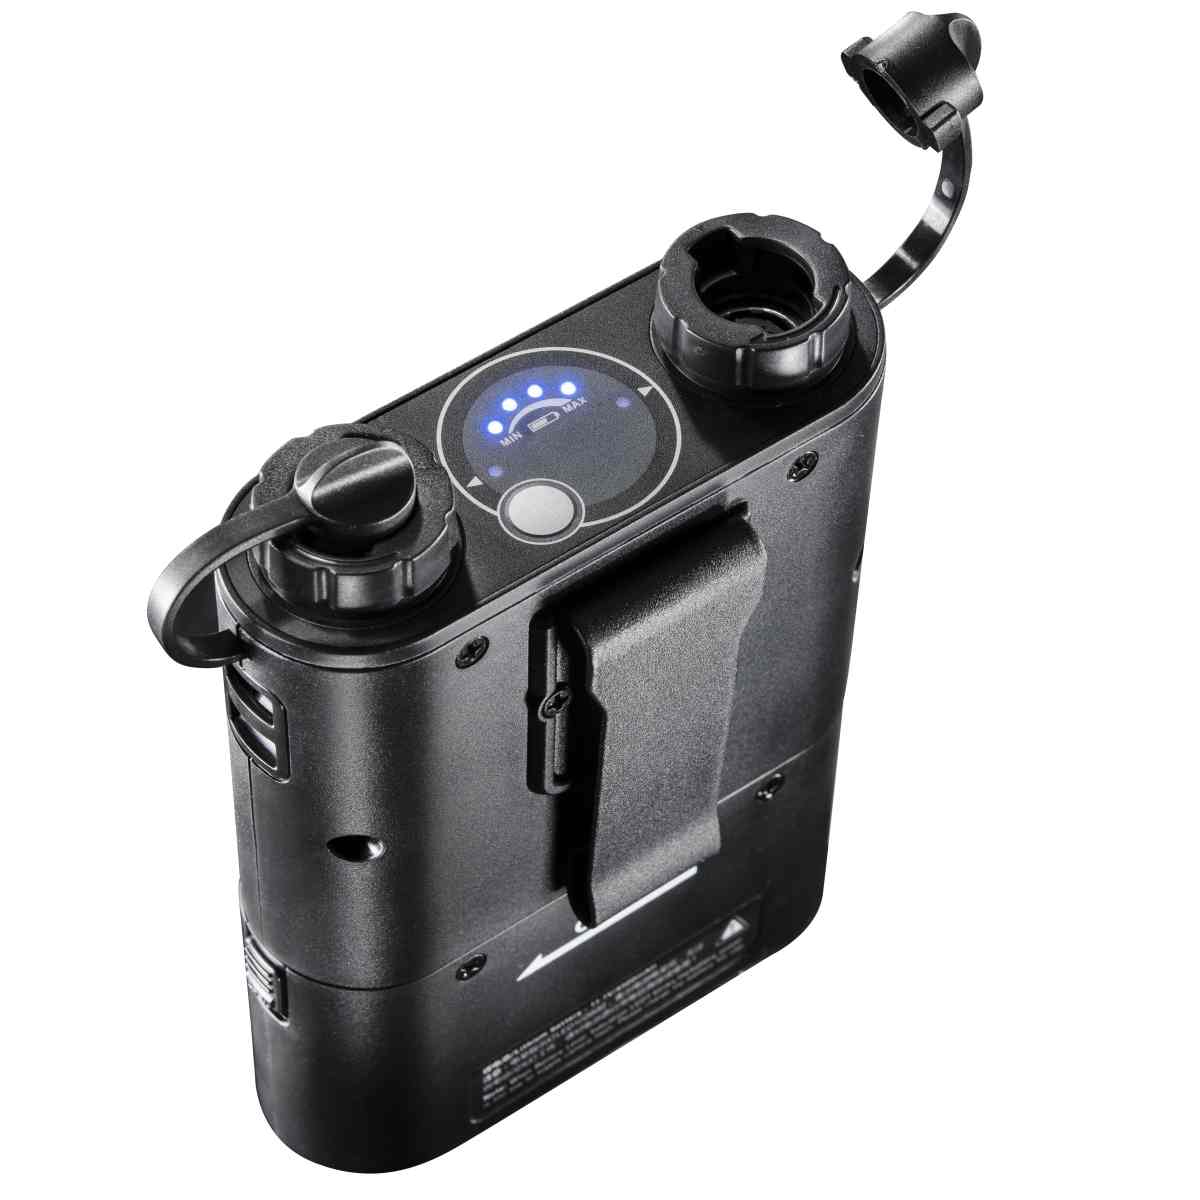 Walimex pro Light shooter 360 TTL/N + Power Porta